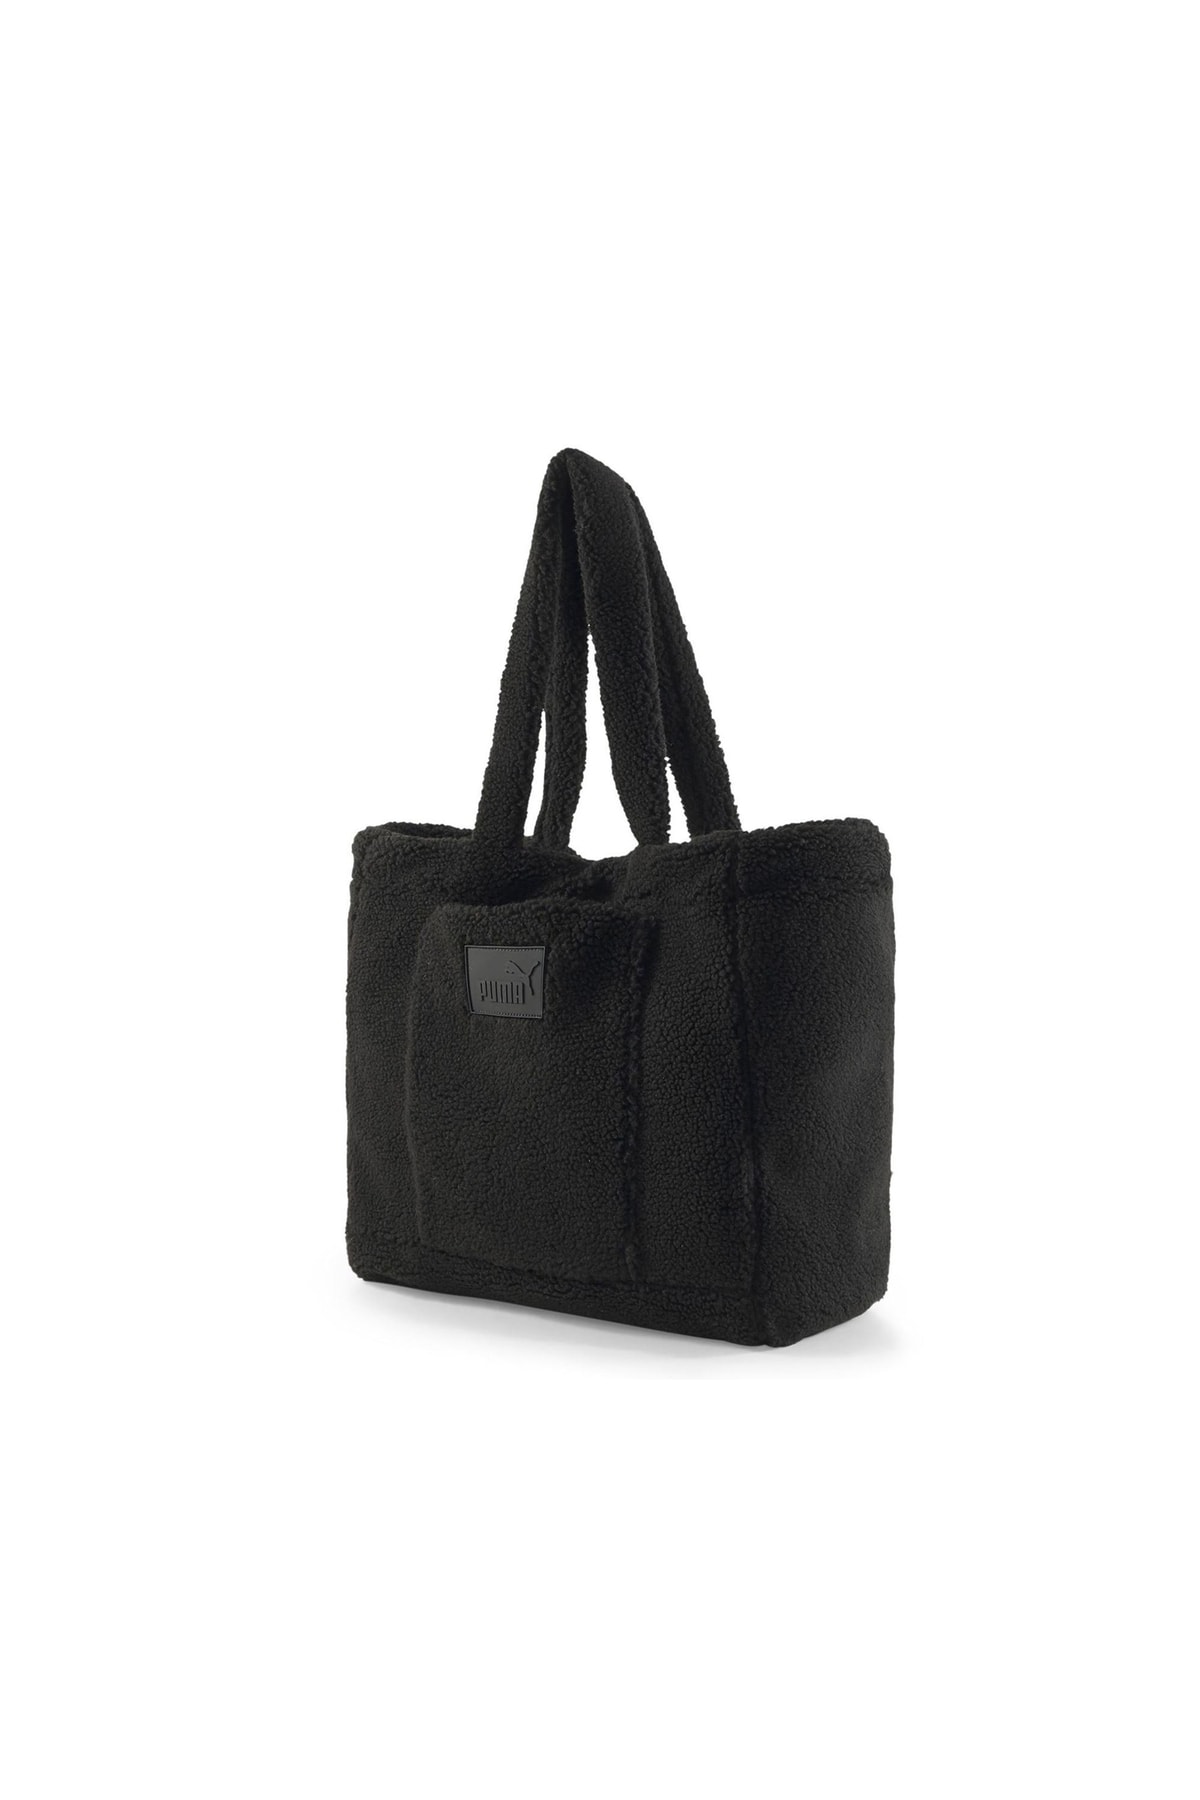 Puma Core Sherpa Tote Bag Günlük El Çantası 7916301 Siyah Fiyatı, Yorumları  - Trendyol